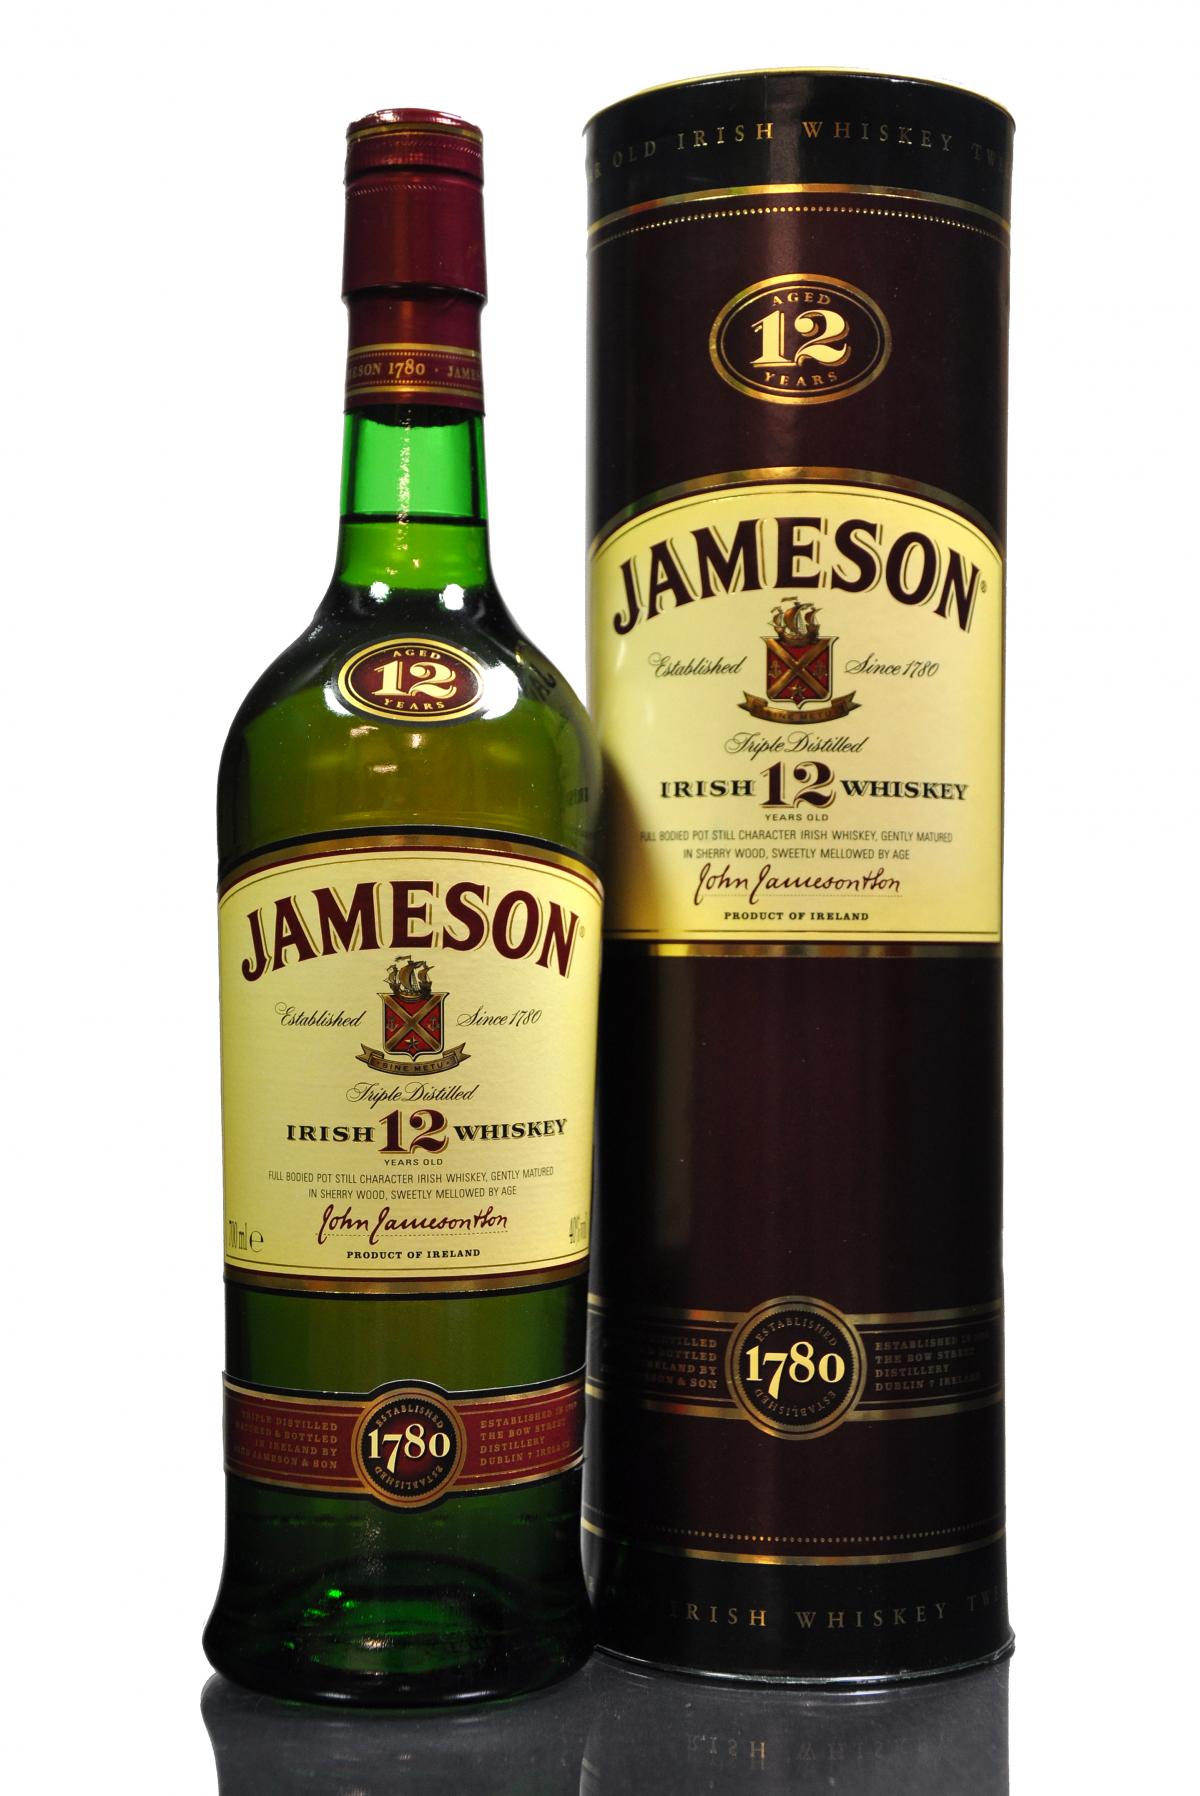 Jameson 12 Year Old Irish Whiskey